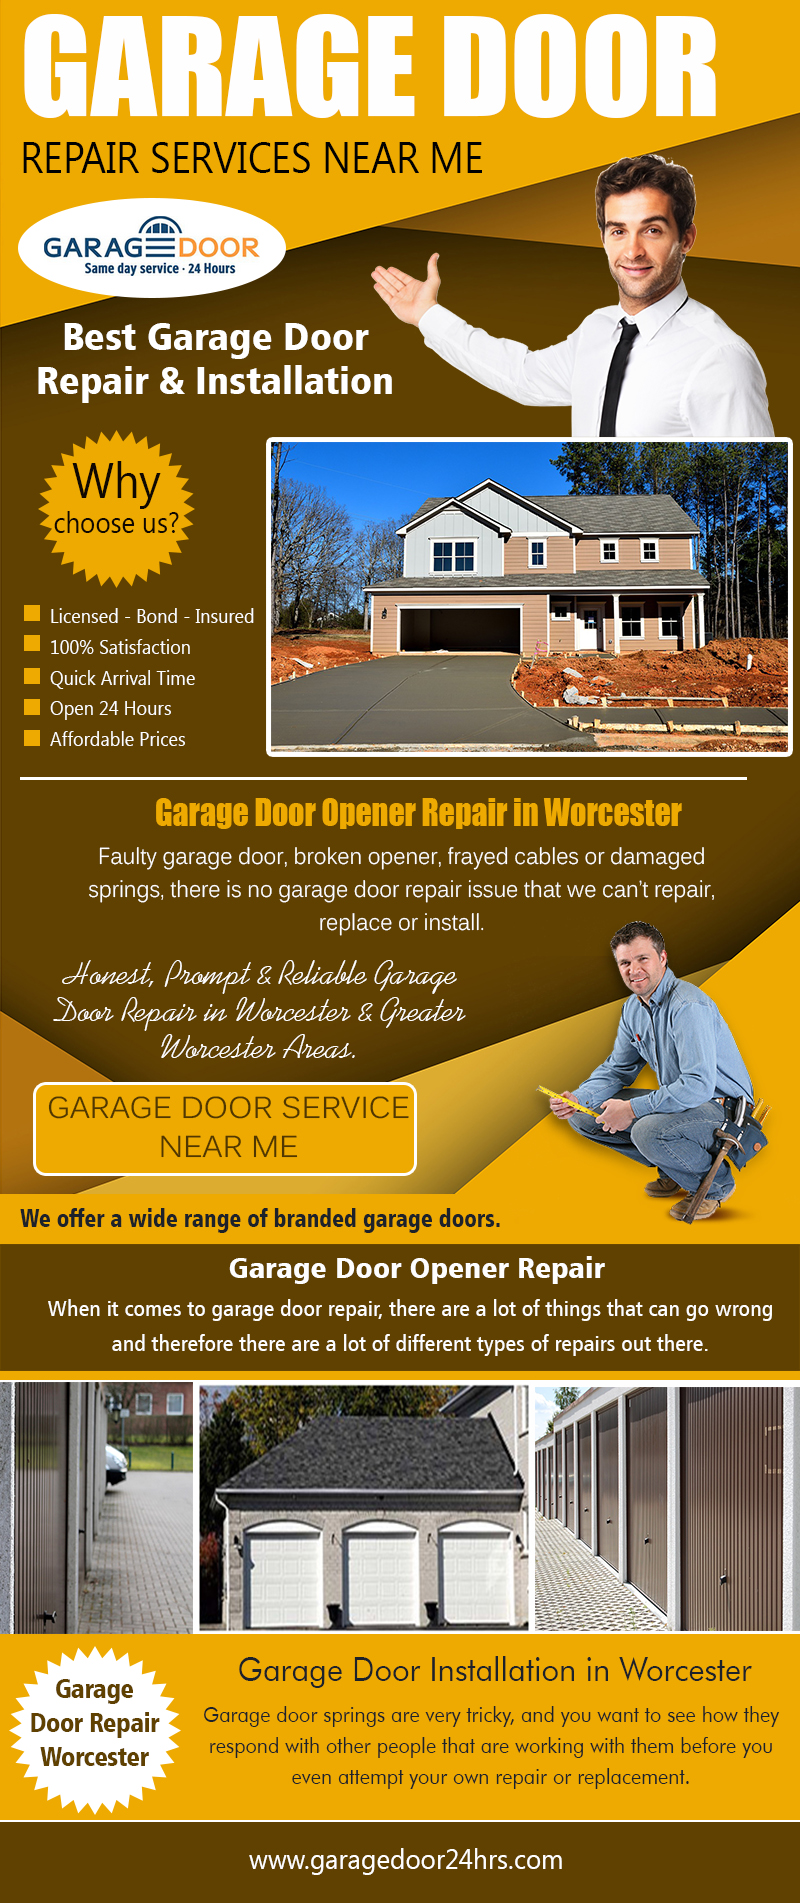 Garage Door Repair Services near me - Manufacturers ...